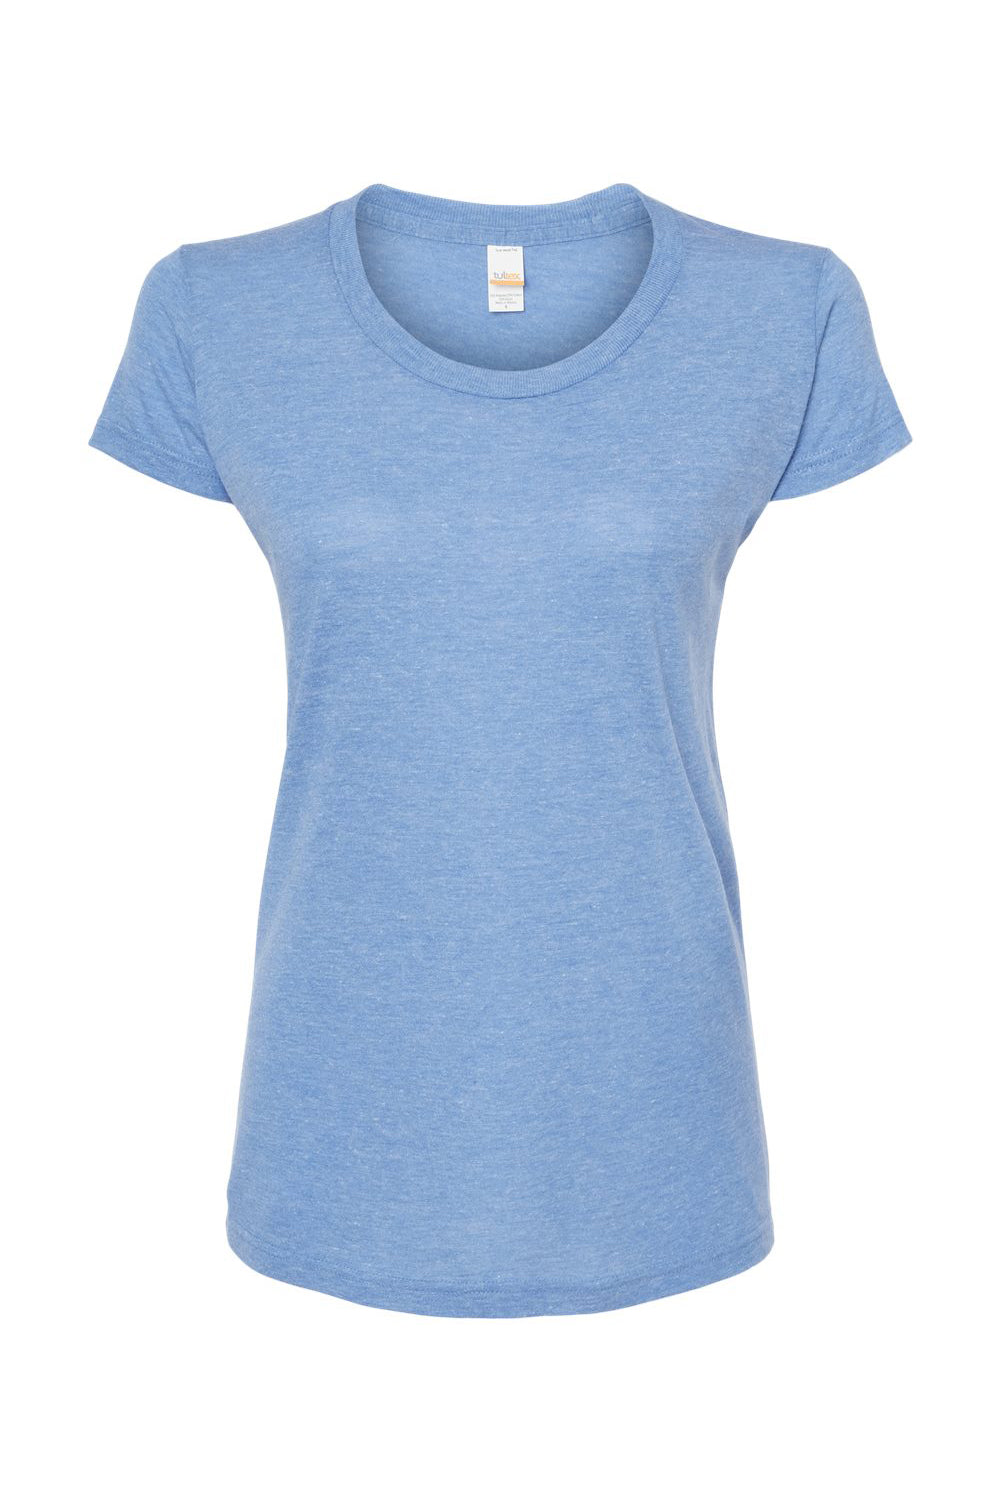 Tultex 253 Womens Short Sleeve Crewneck T-Shirt Athletic Blue Flat Front